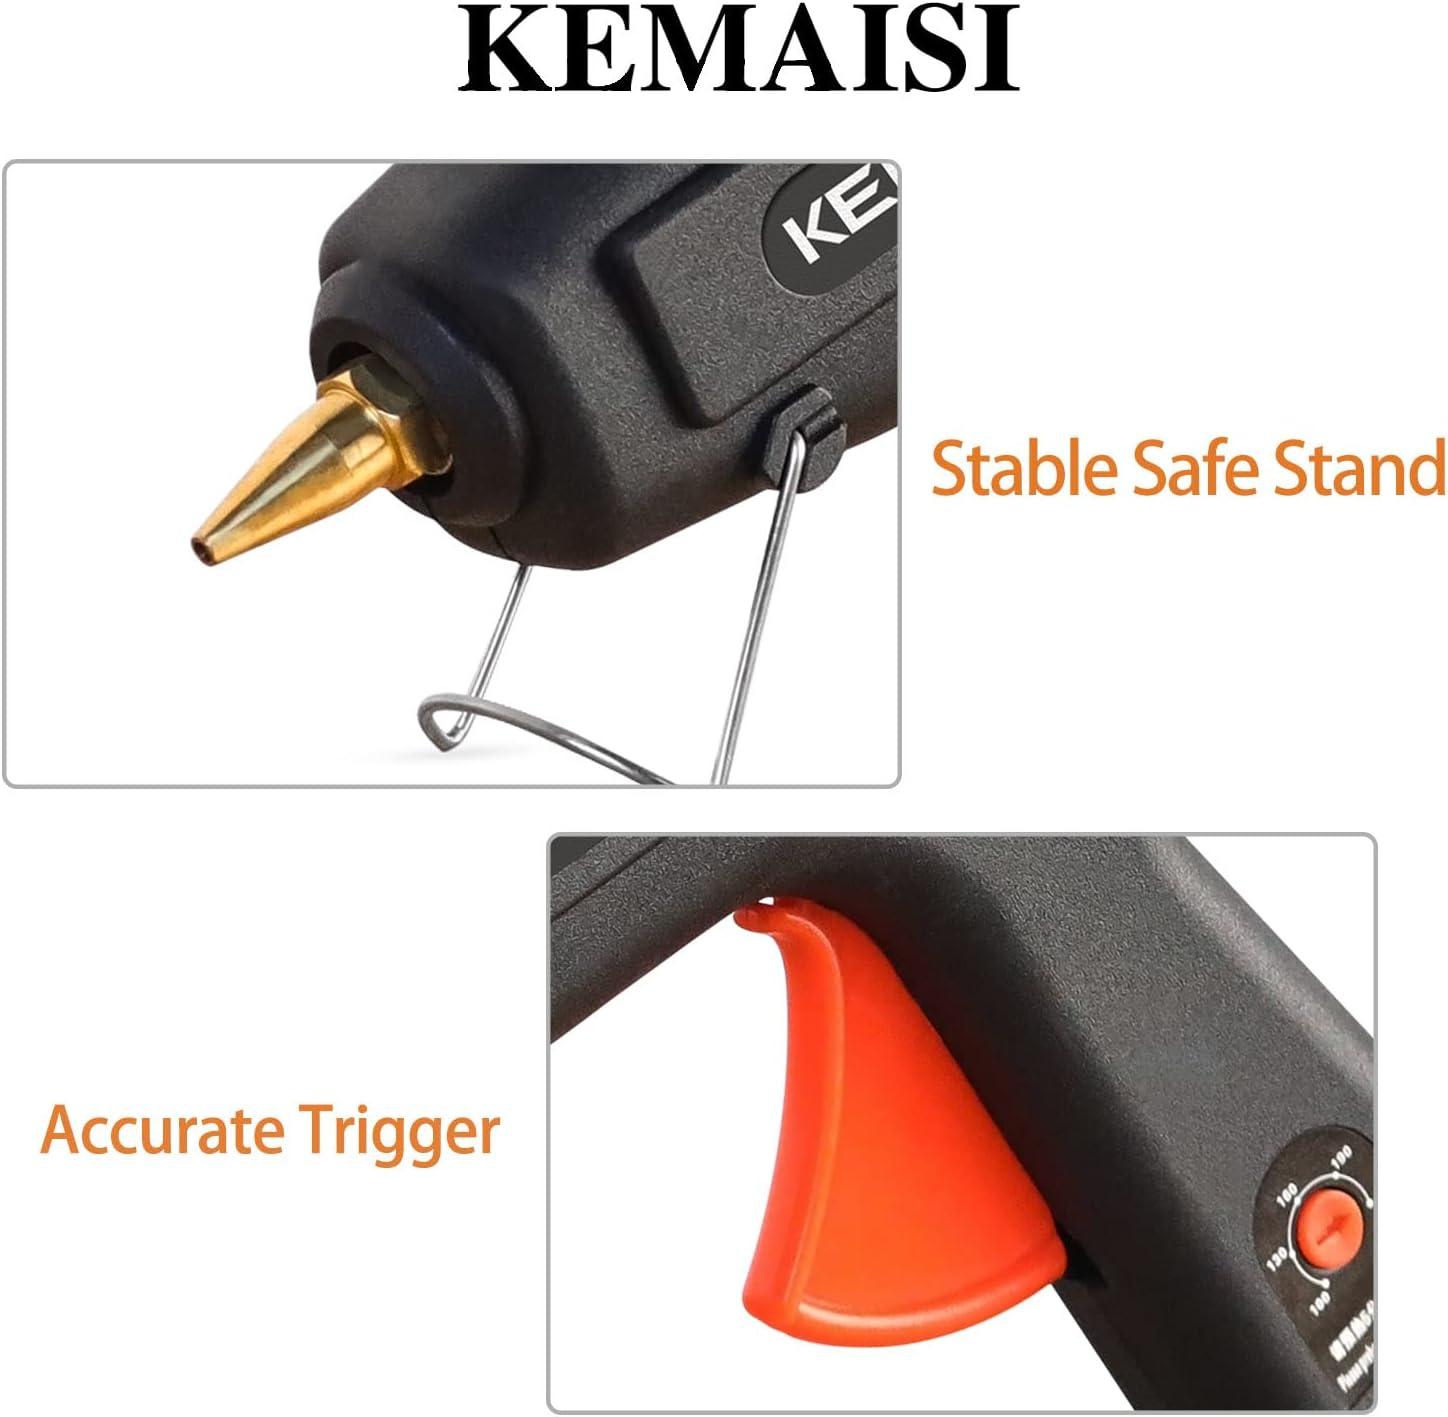 KEMAISI Hot Glue Gun Kit, 60W High Temp Hot Glue Guns with 25pcs Premium  Glue Sticks, ON/Off Switch, No Drips Design, Fine Tip Glue Gun for Crafts